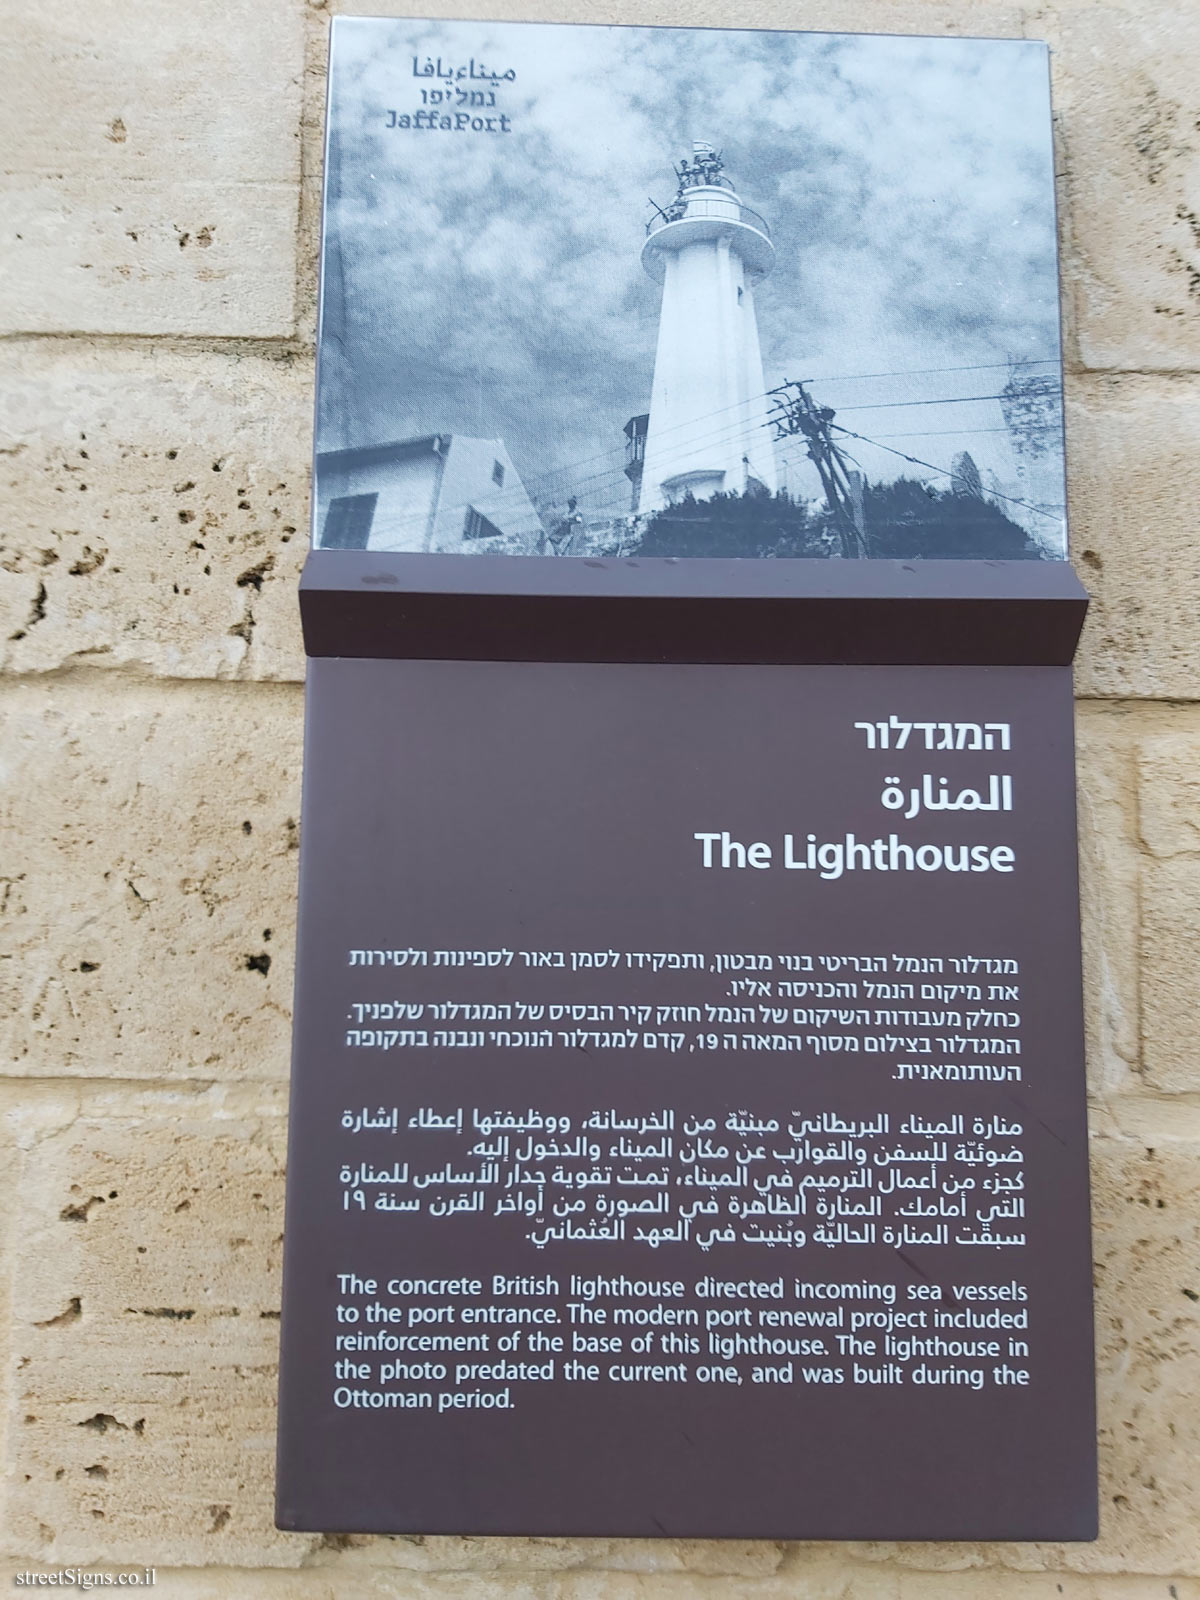 Tel Aviv - Jaffa Port - The Lighthouse